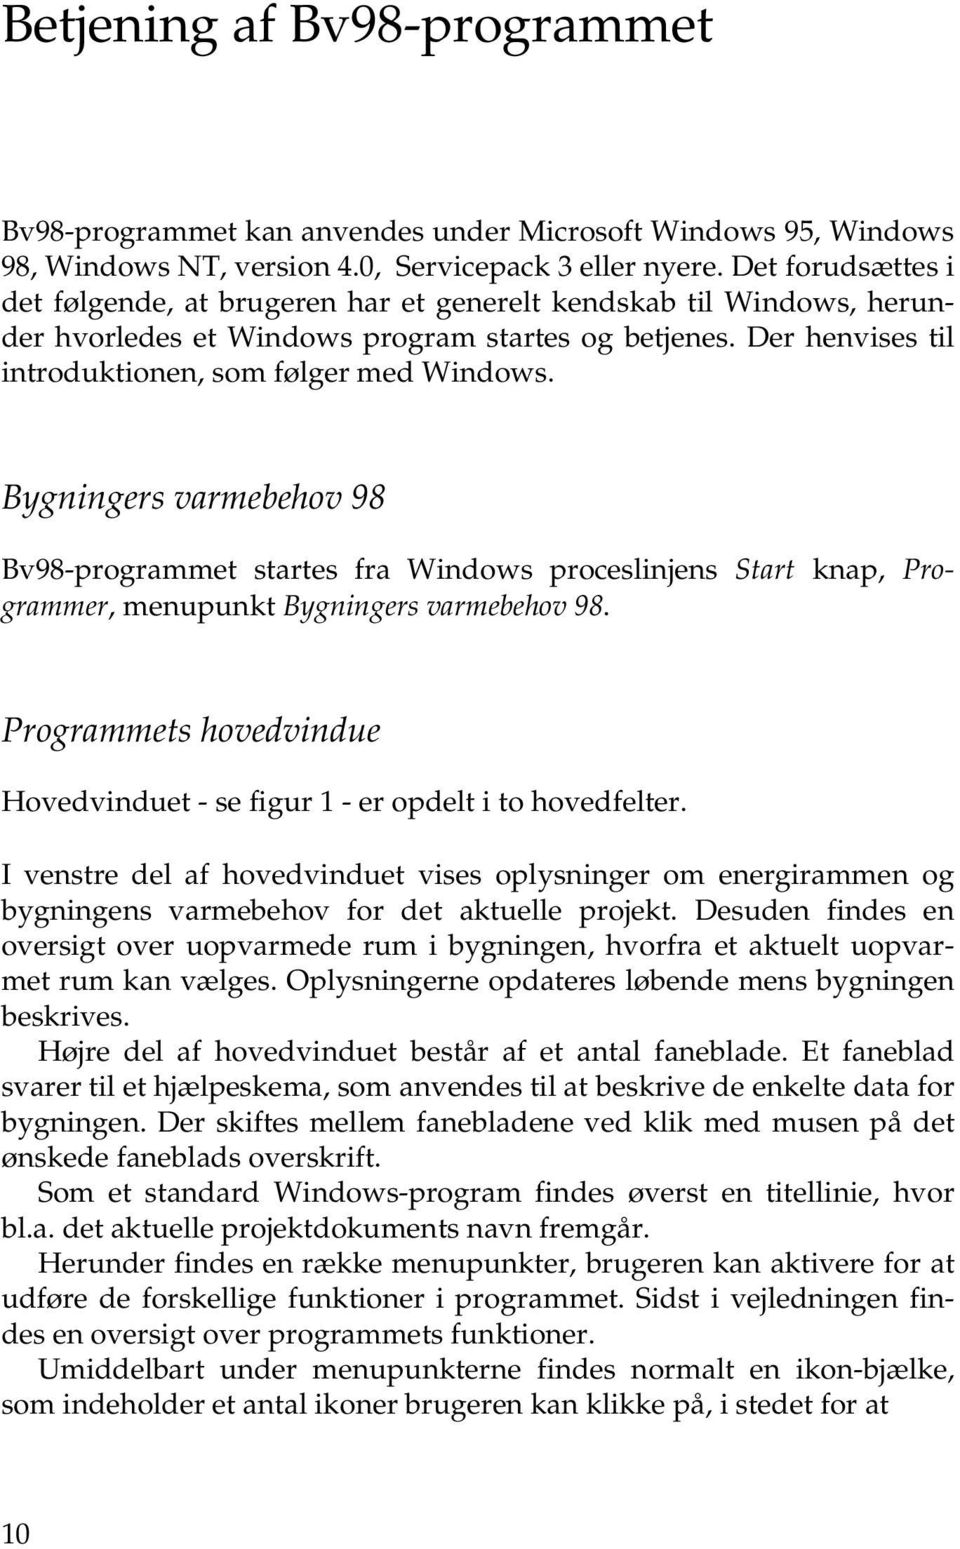 Bygningers varmebehov 98 Bv98-programmet startes fra Windows proceslinjens Start knap, Programmer, menupunkt Bygningers varmebehov 98.